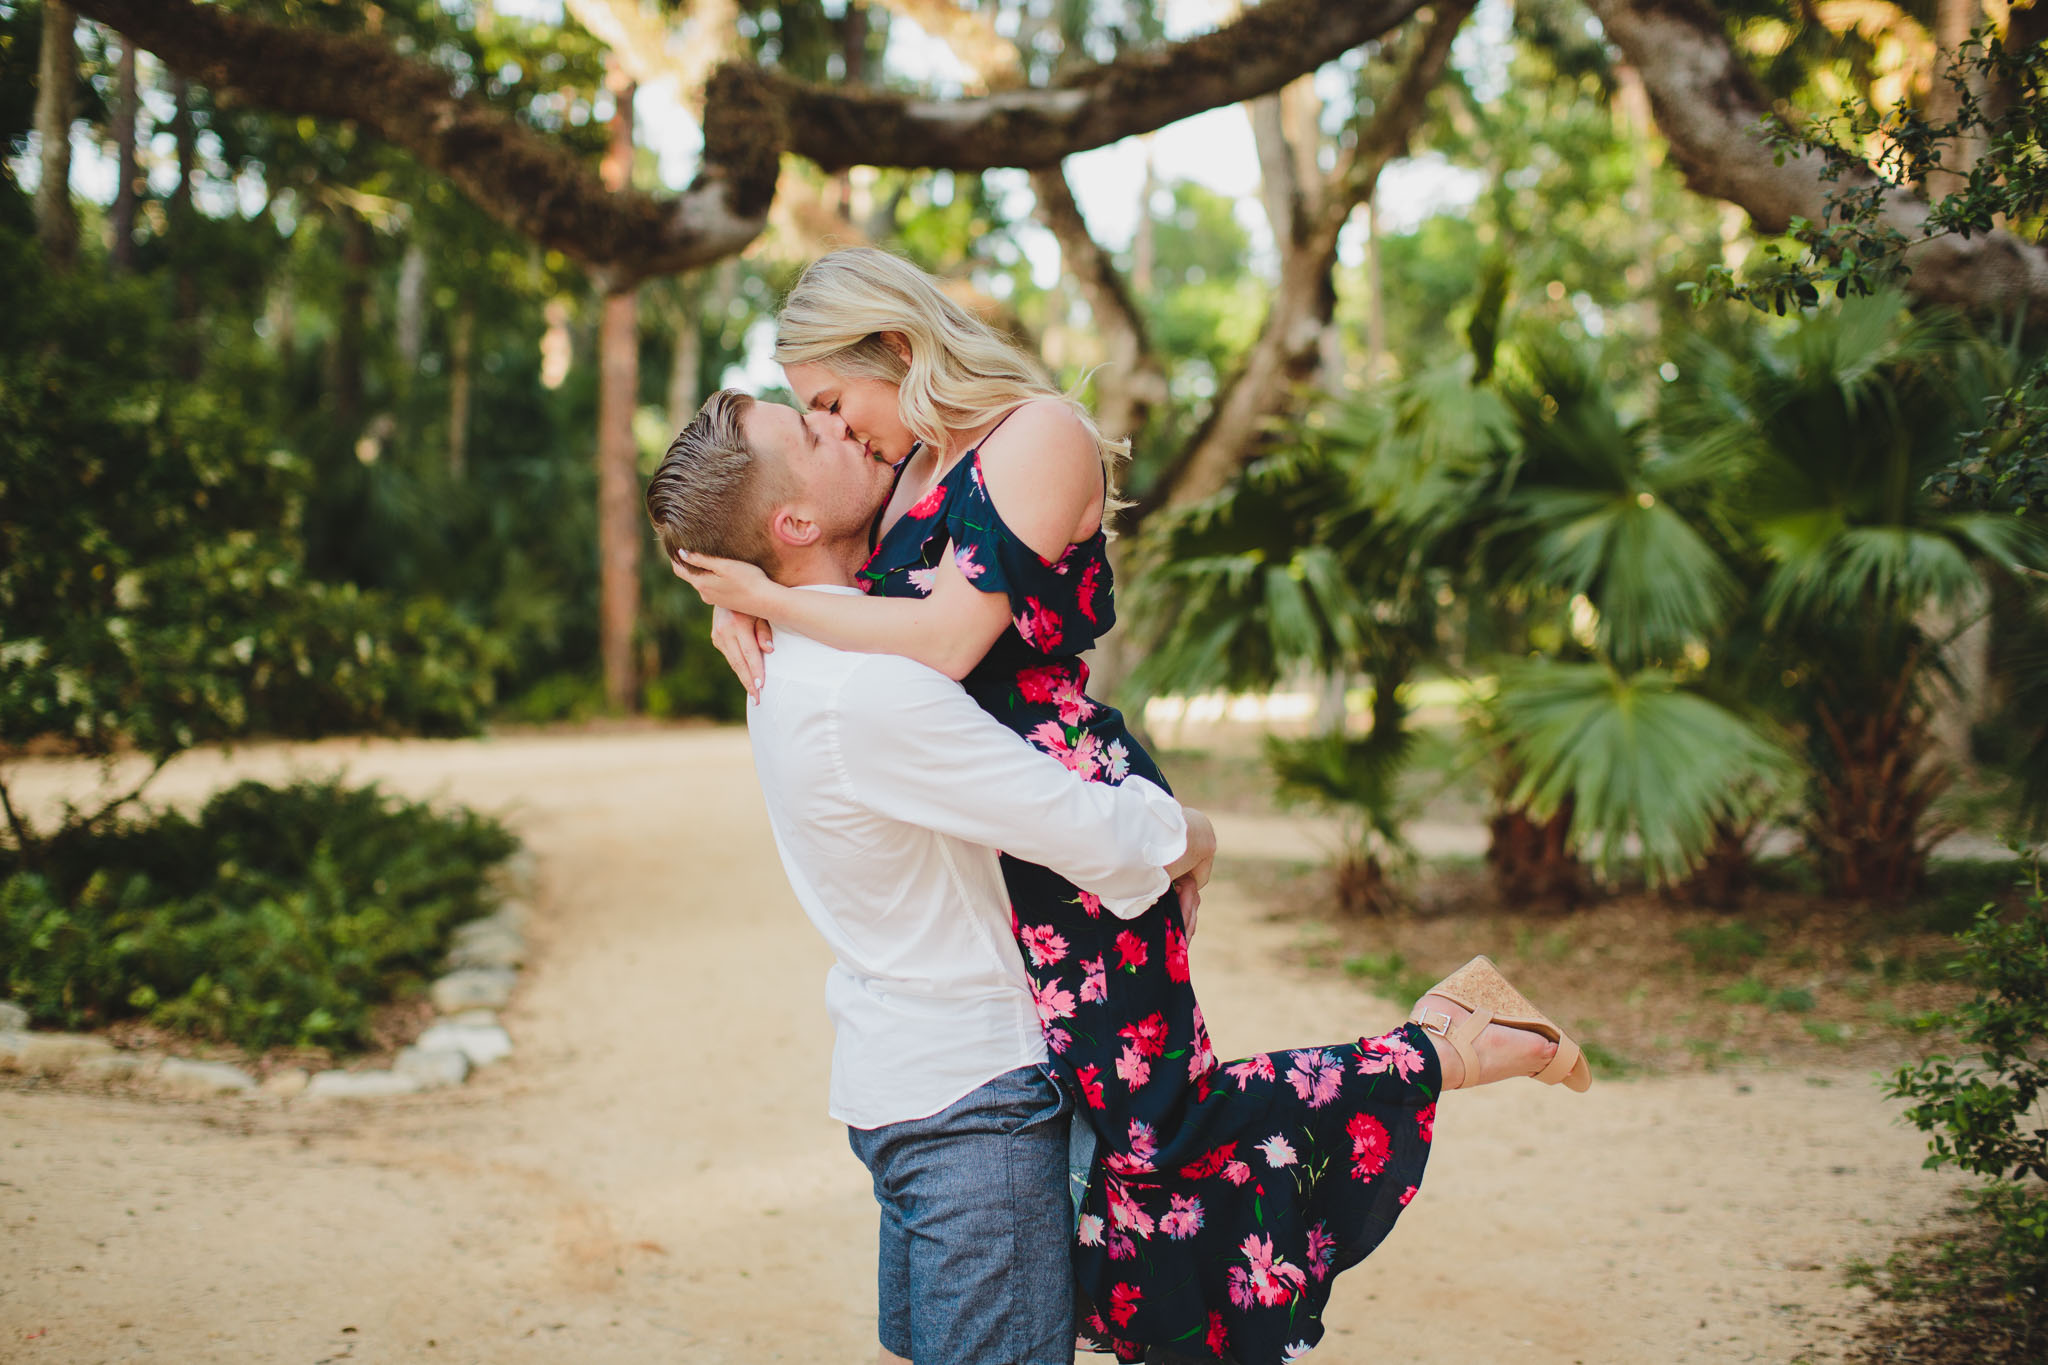 man lifting and kissing woman in washington oaks park and gardens